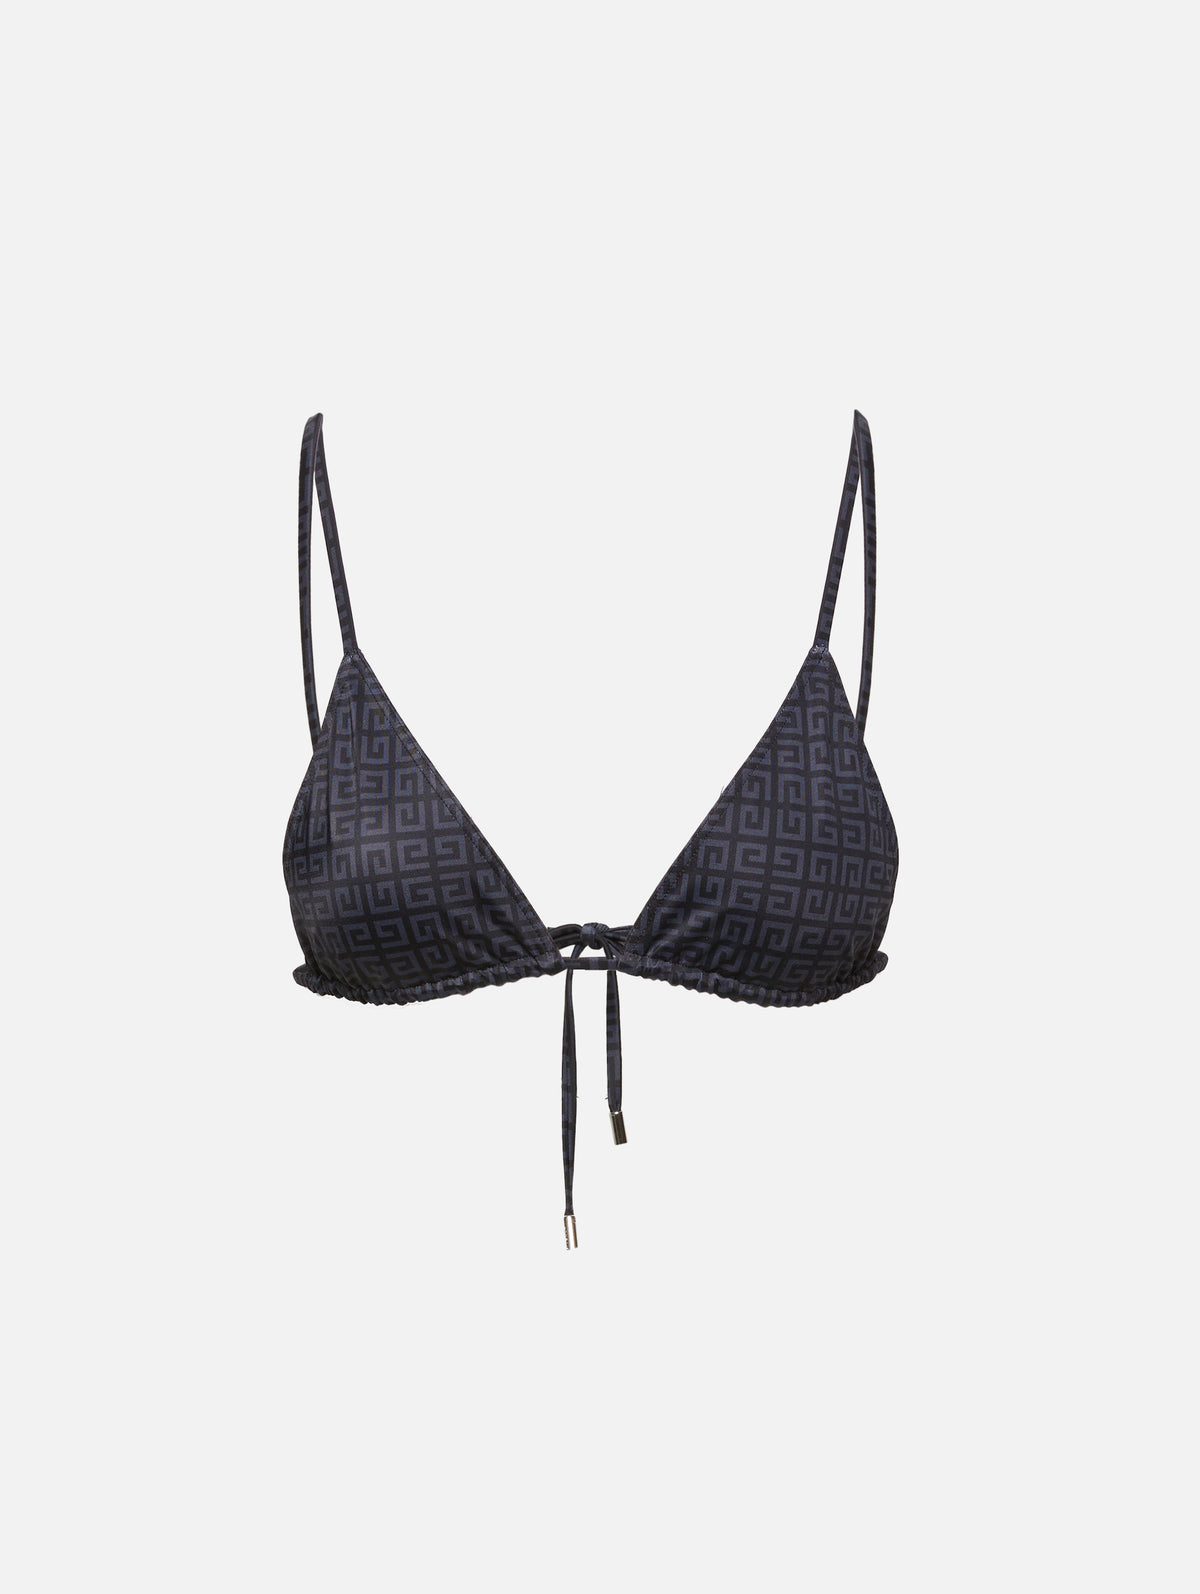 Givenchy Monogram Triangle Bikini Top